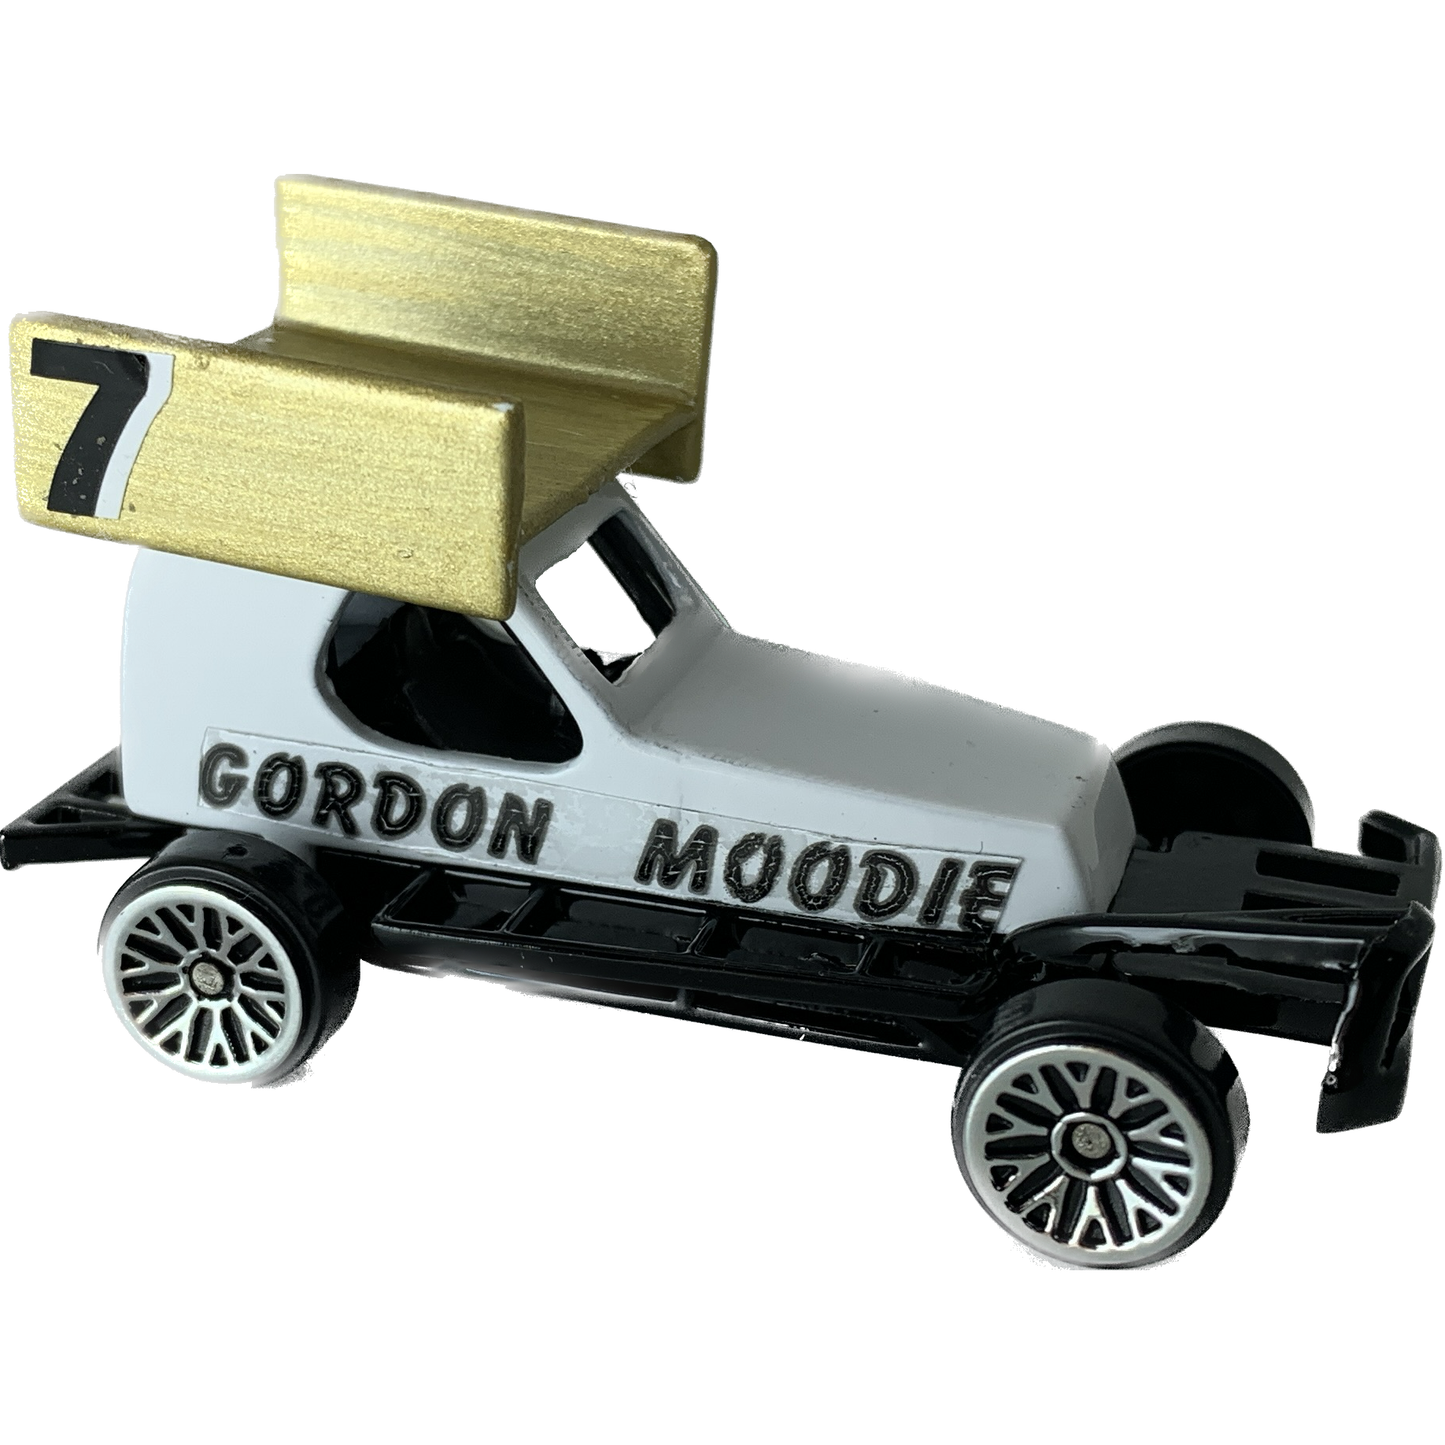 #7 Gordon Moodie - Gold Roof